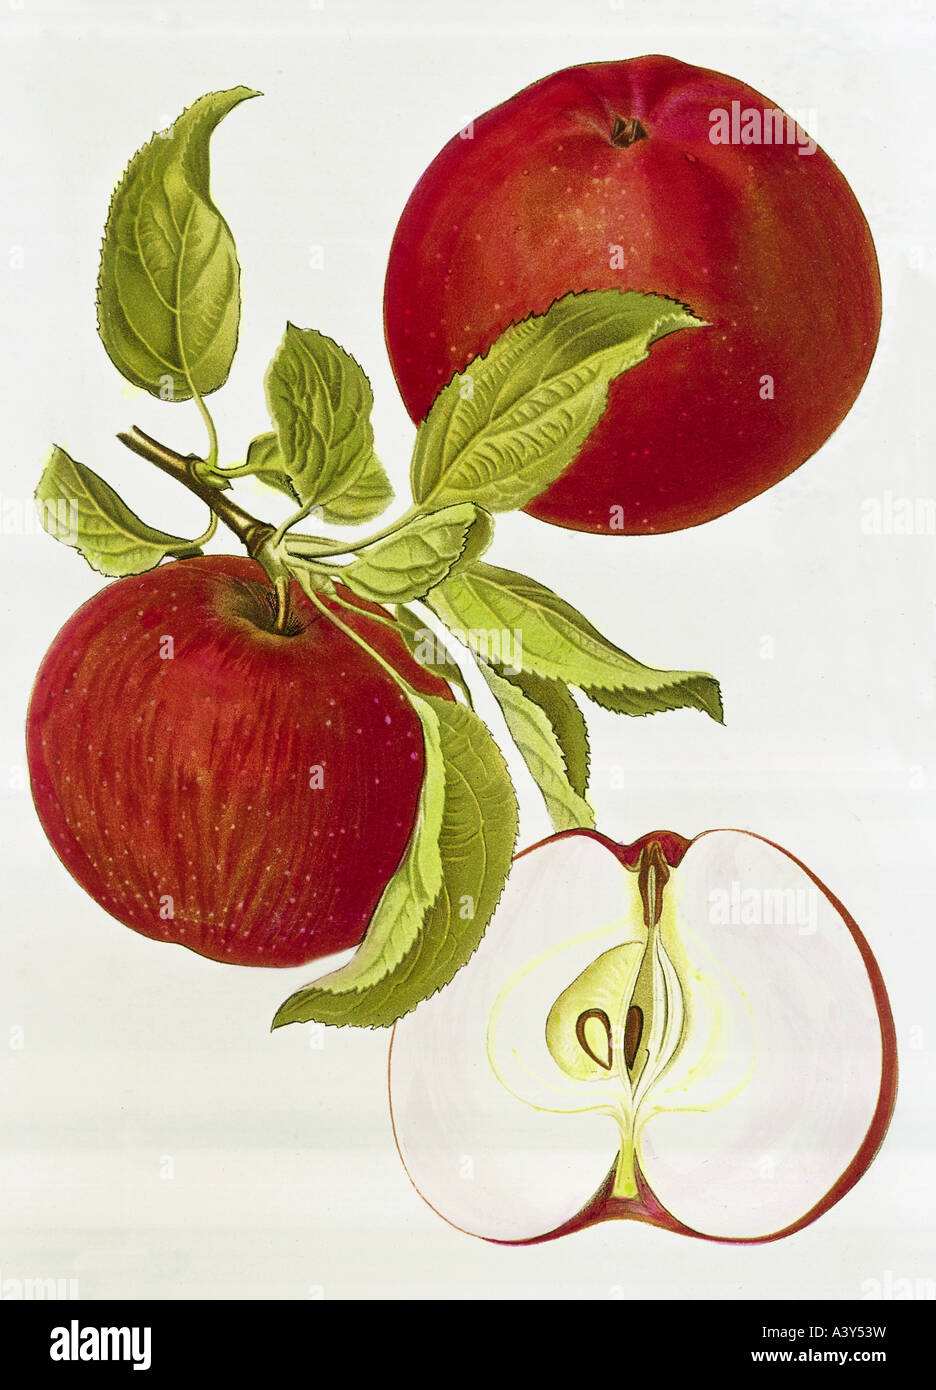 botany, Malus, 'apple', (Malus domestica), Red Winterdove apple, fruit on twig, colour lithograph, circa 1880 / 1890, illustration, 19th century, , Stock Photo